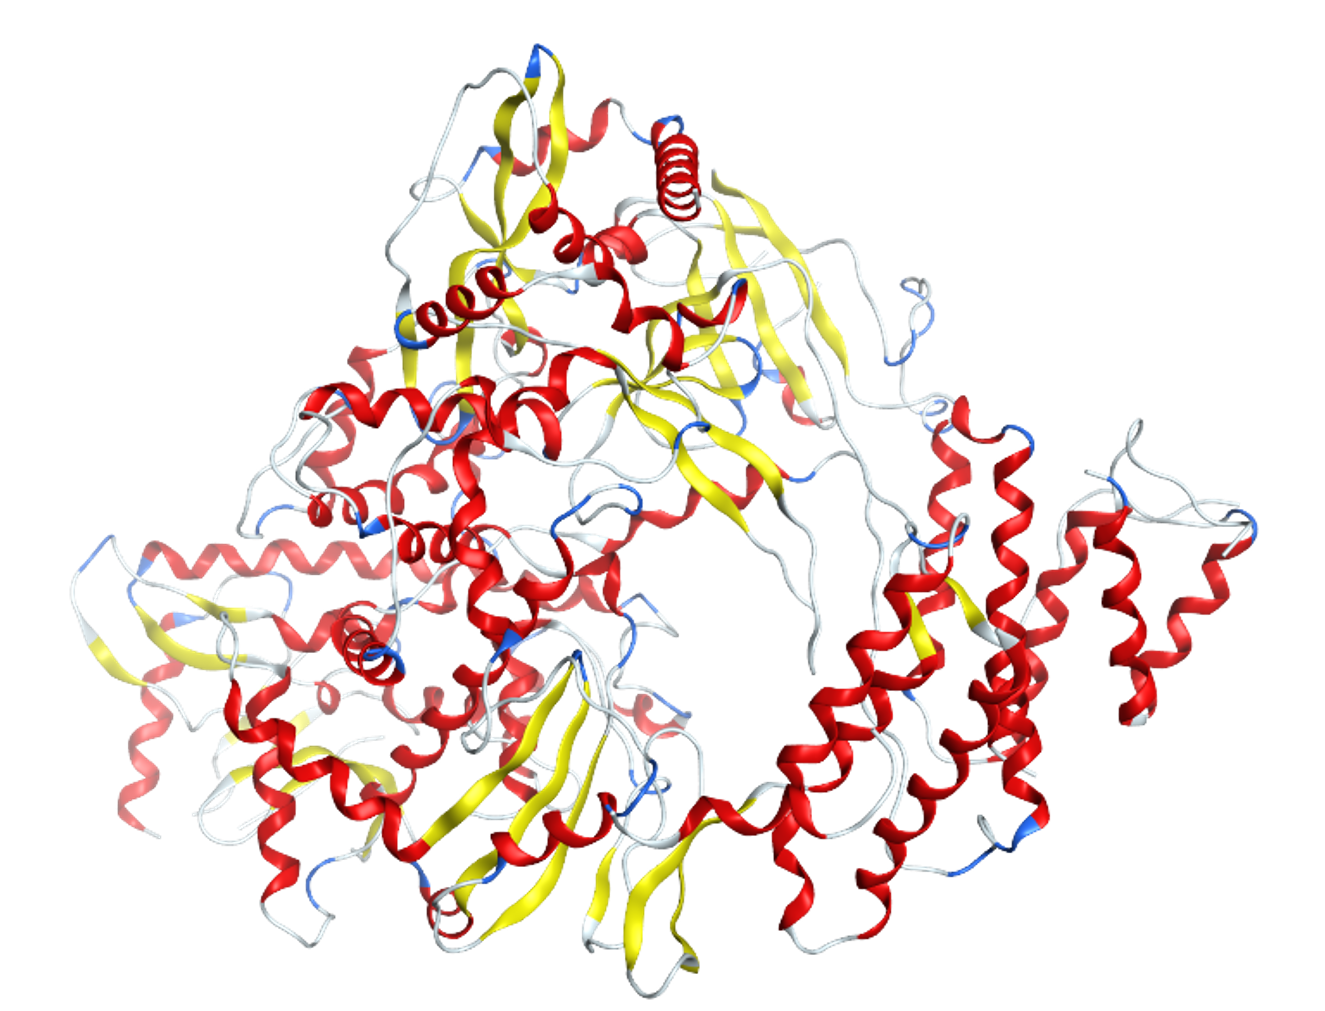 RNA dependent RNA polymerase